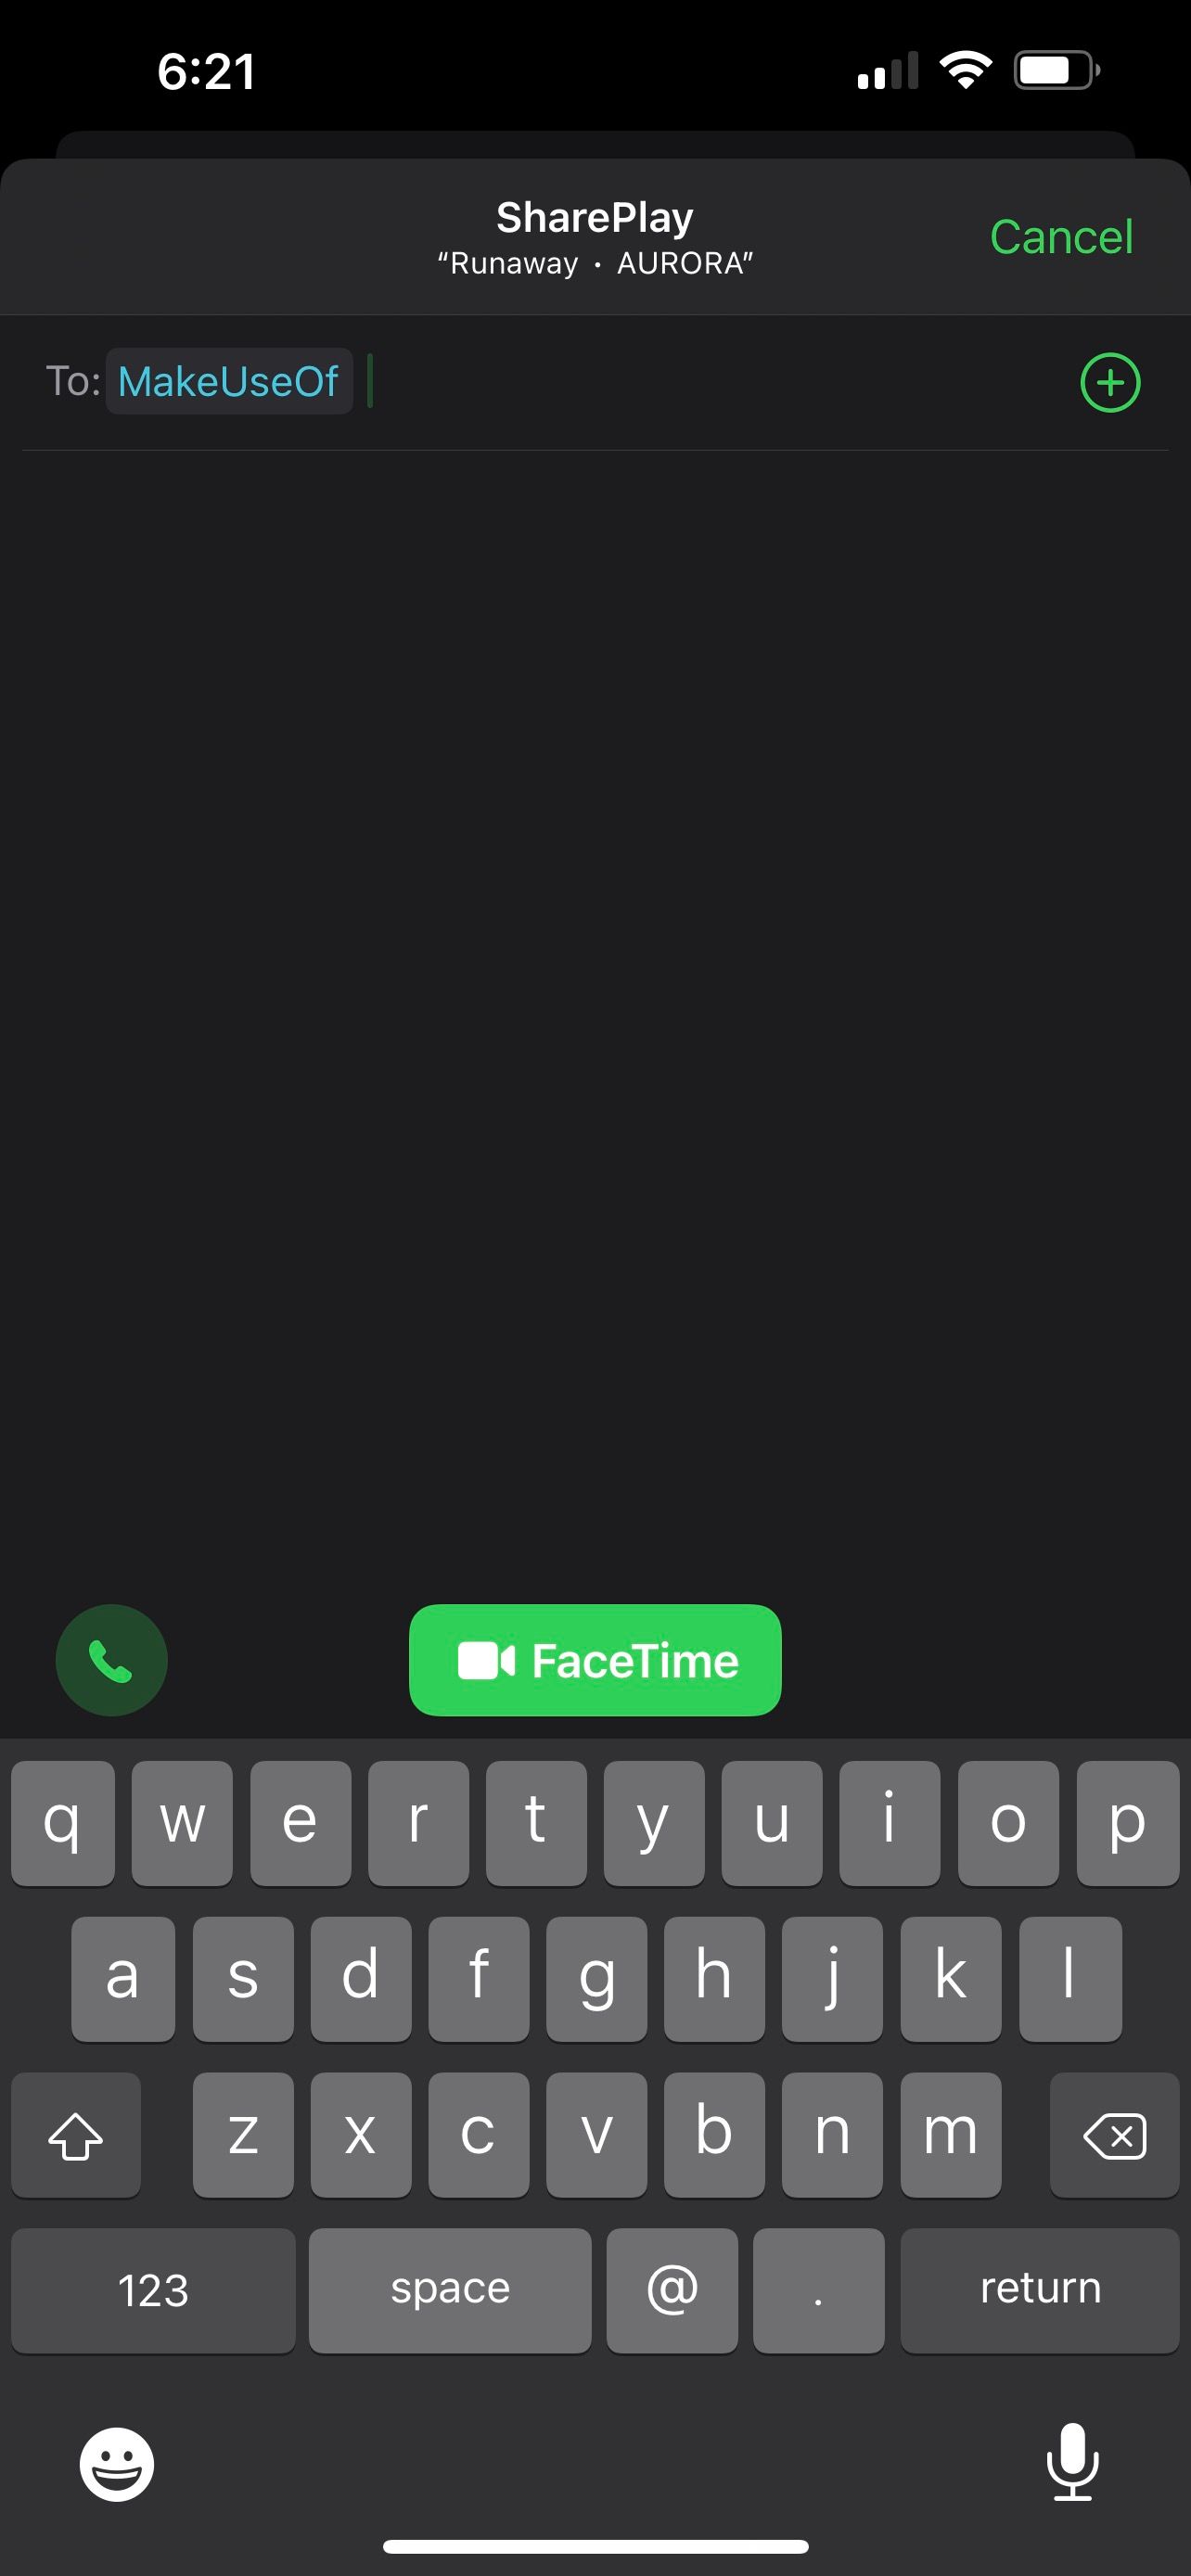 SharePlay FaceTime call